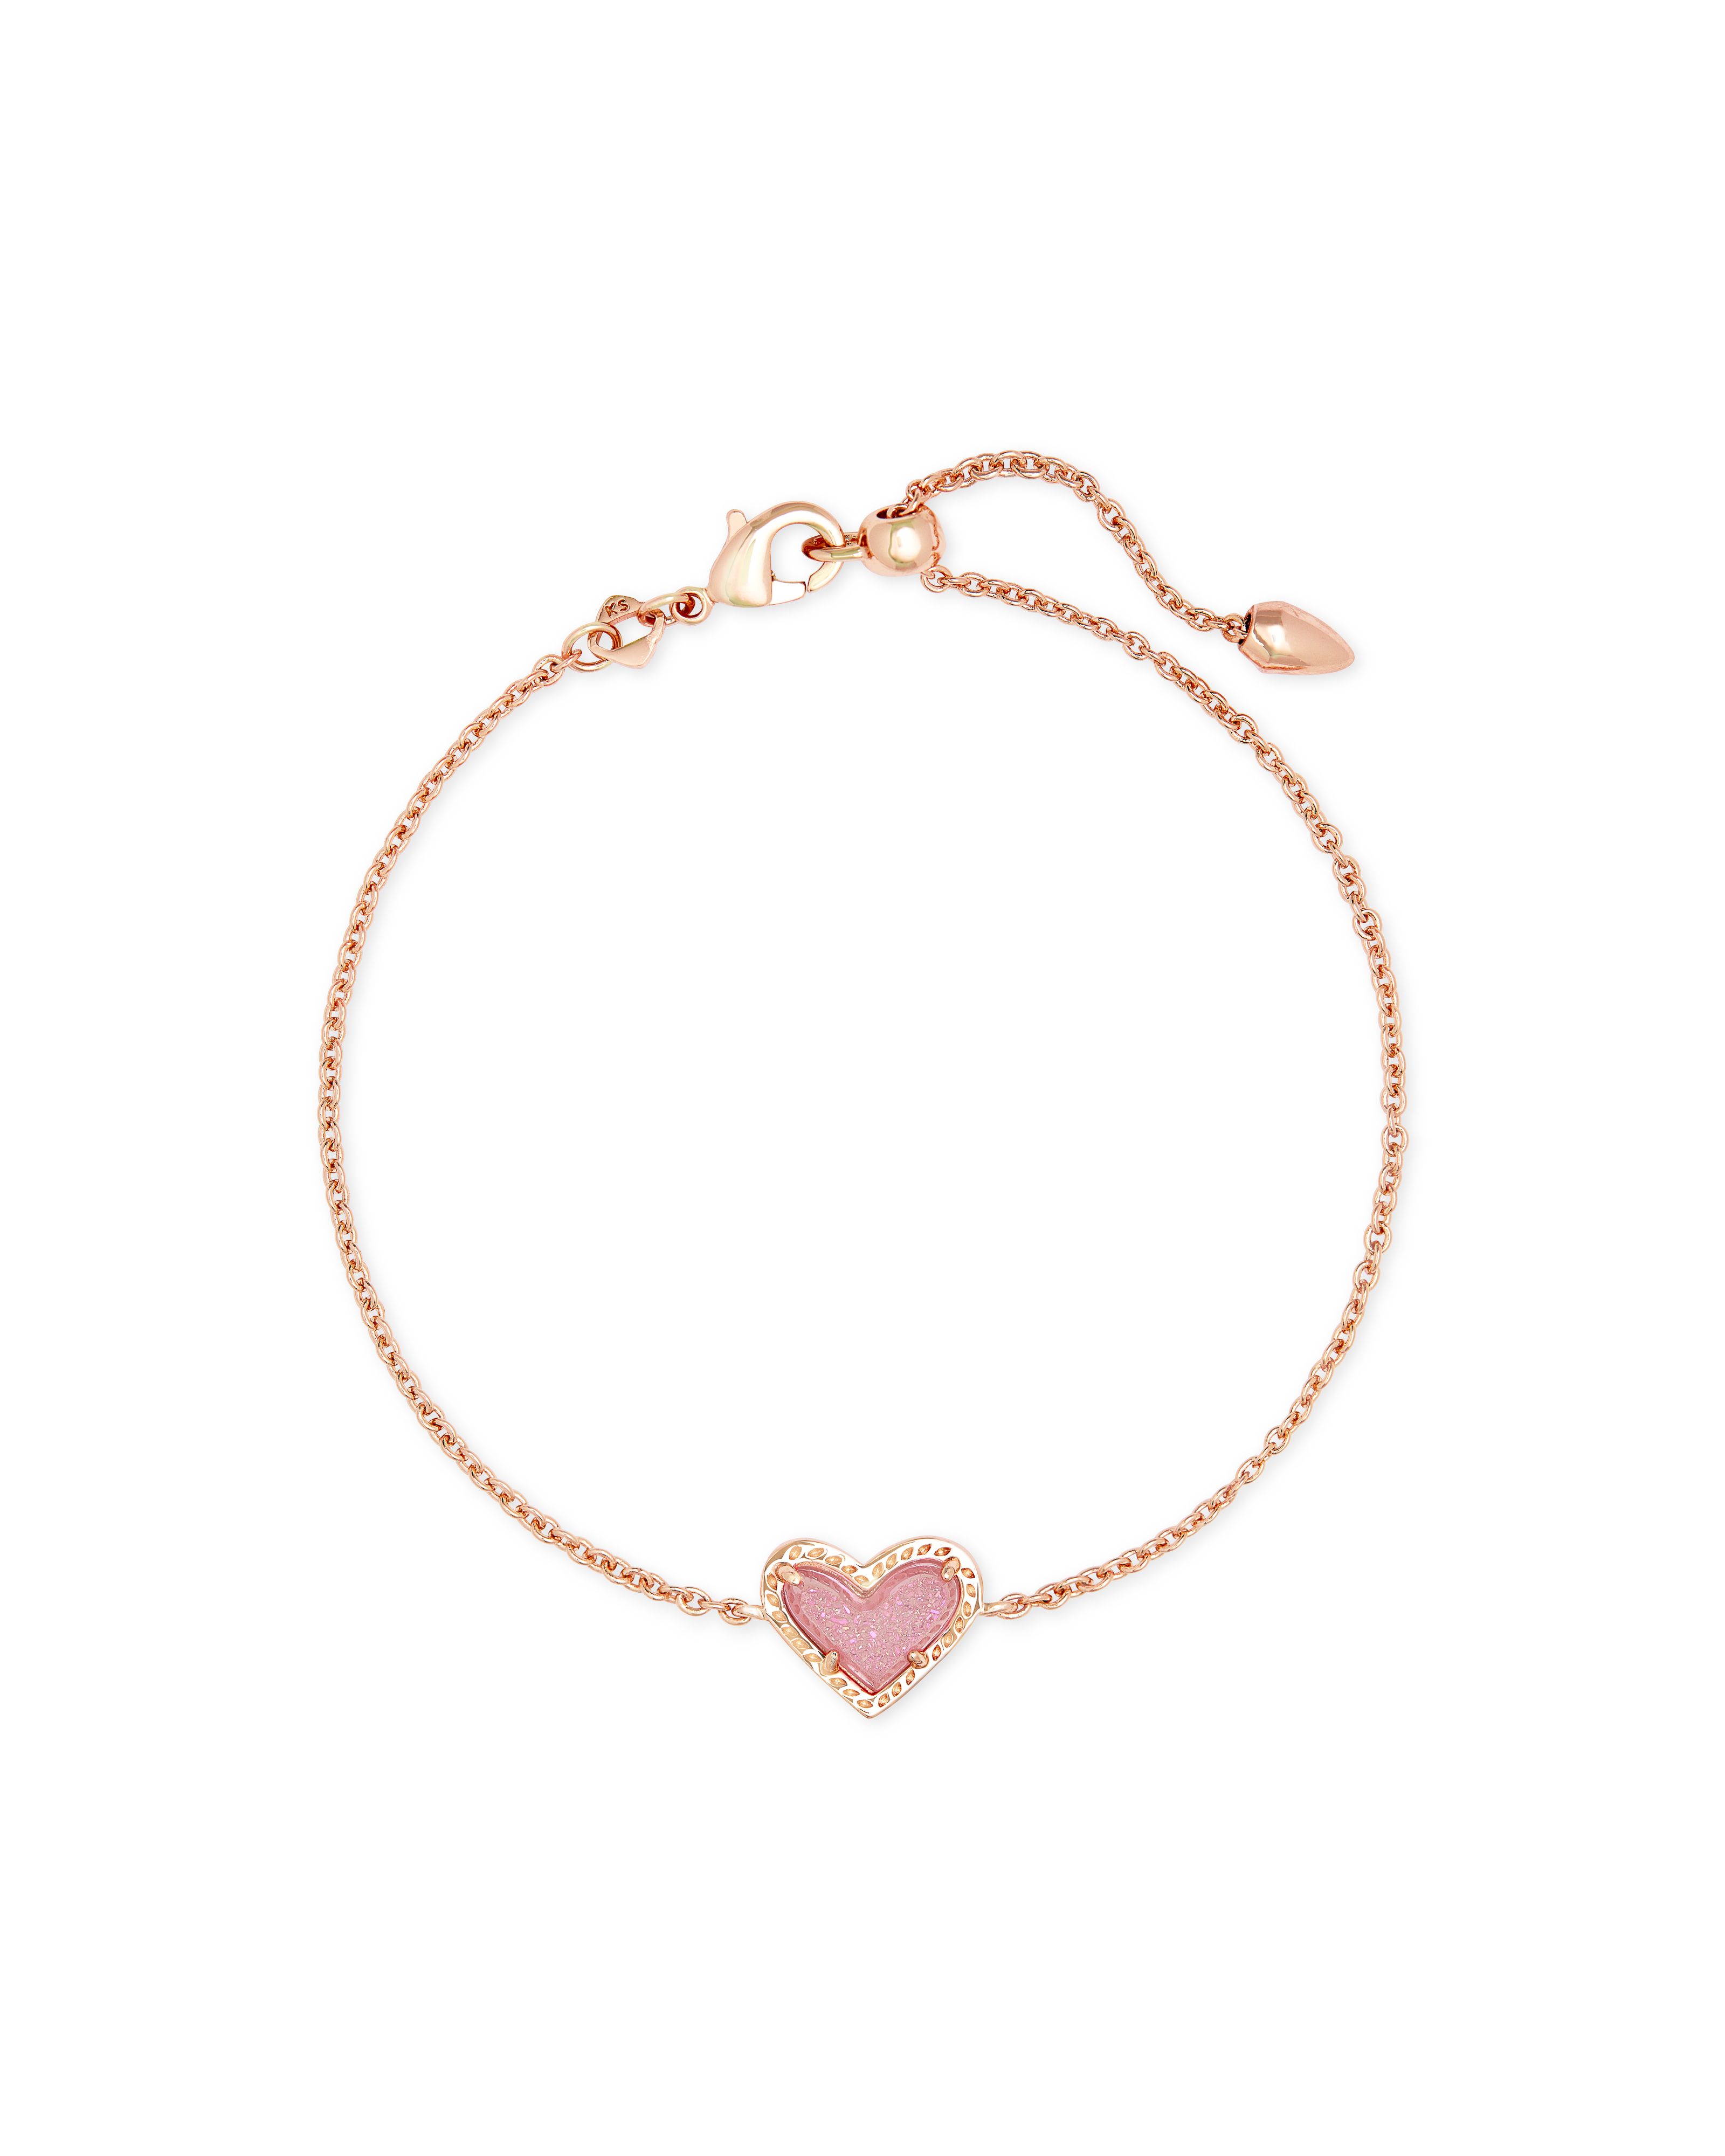 Ari Heart Rose Gold Chain Bracelet in Pink Drusy | Kendra Scott | Kendra Scott